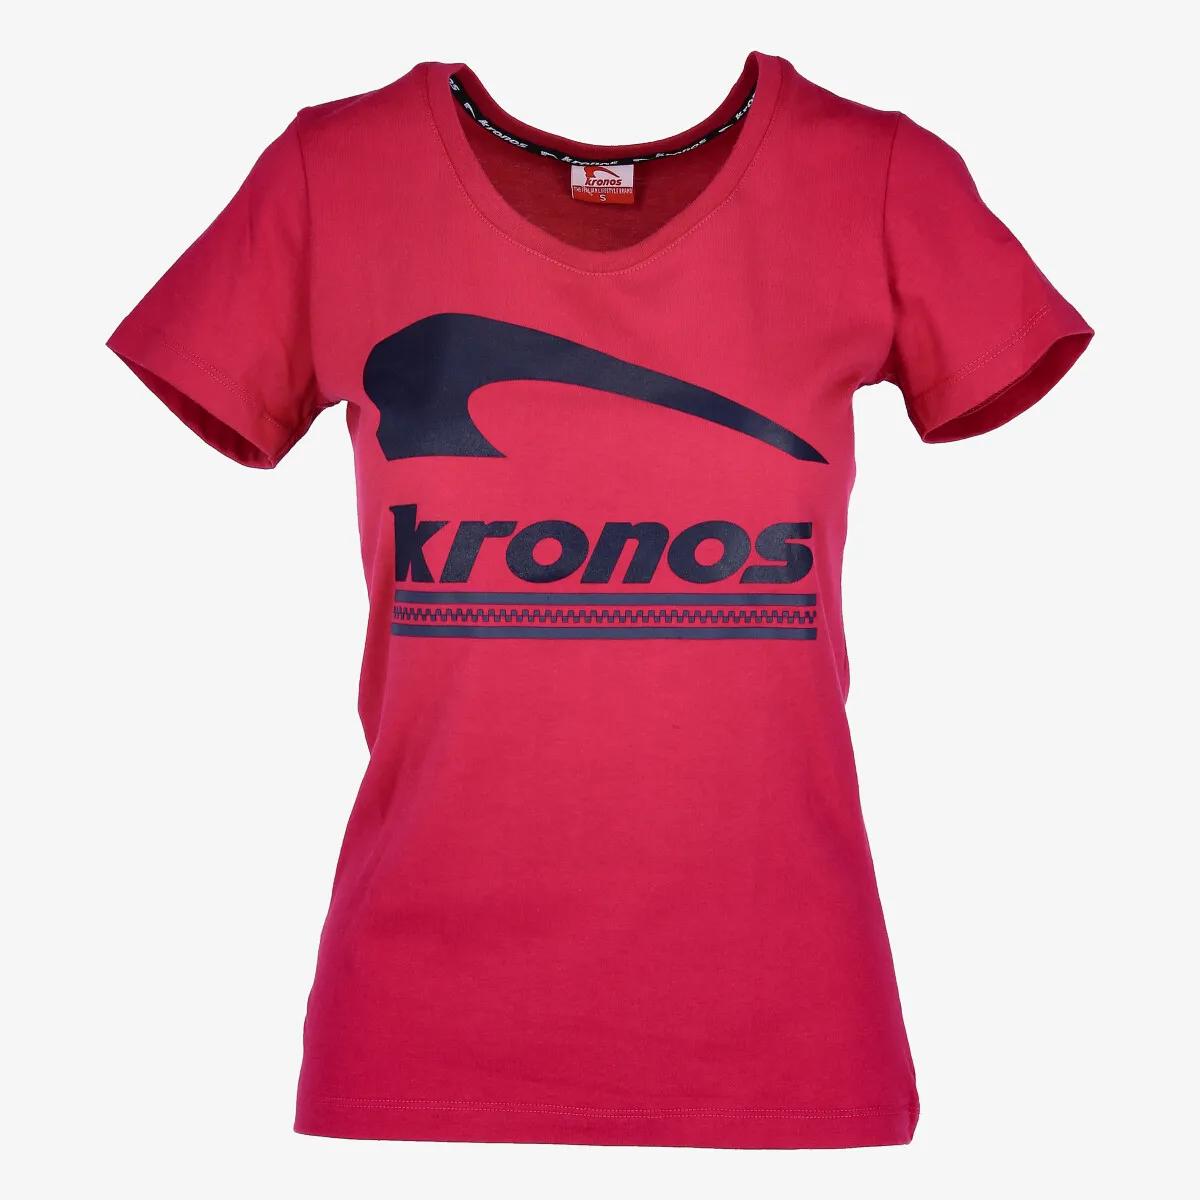 Kronos Tricou Benedeta T-Shirt 